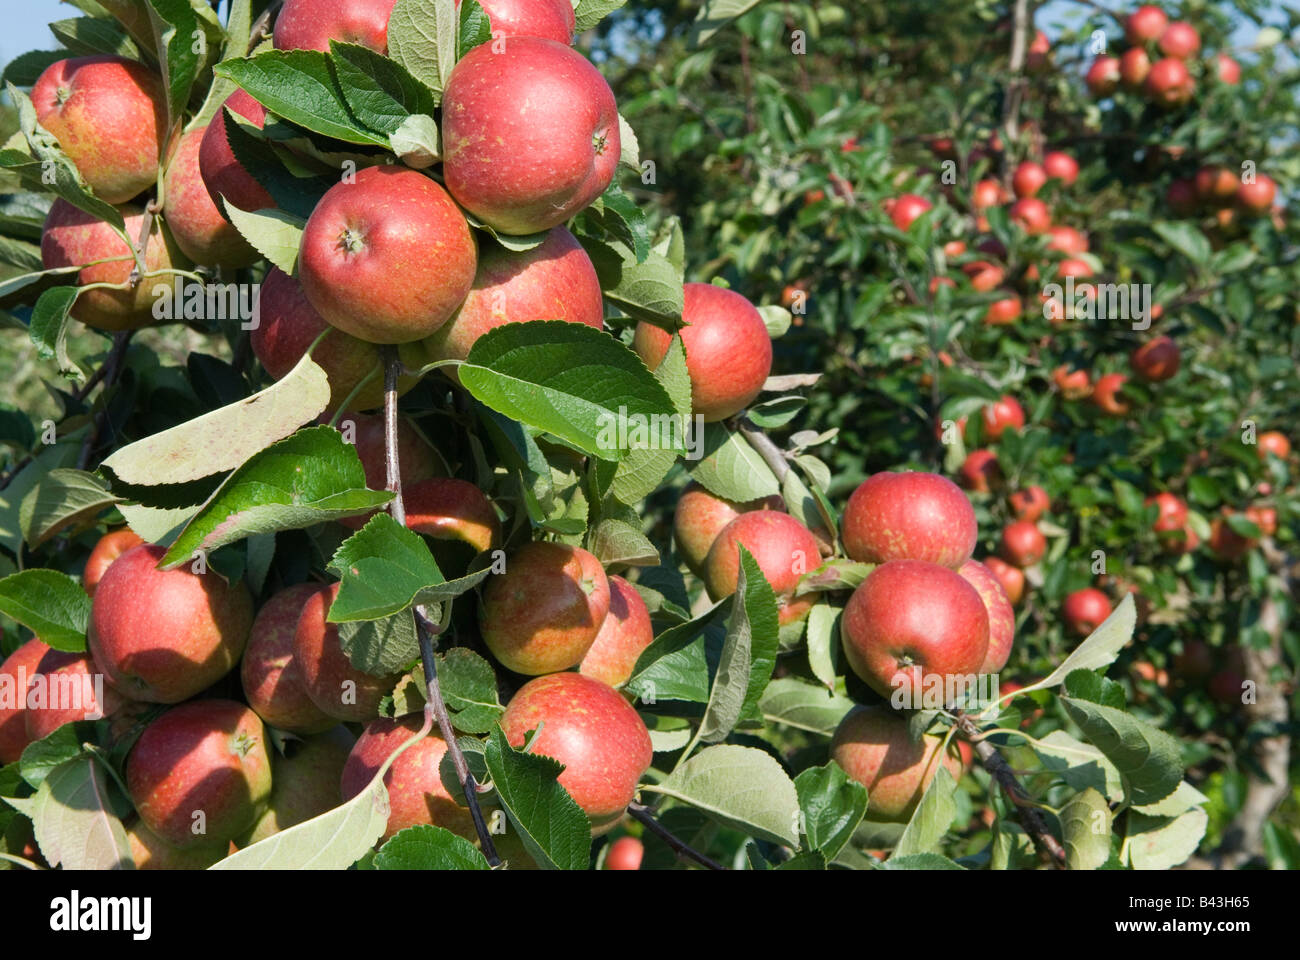 English Apples. Kidds Orange apple, Lathcoats Apple Farm Galleywood Essex UK  HOMER SYKES Stock Photo